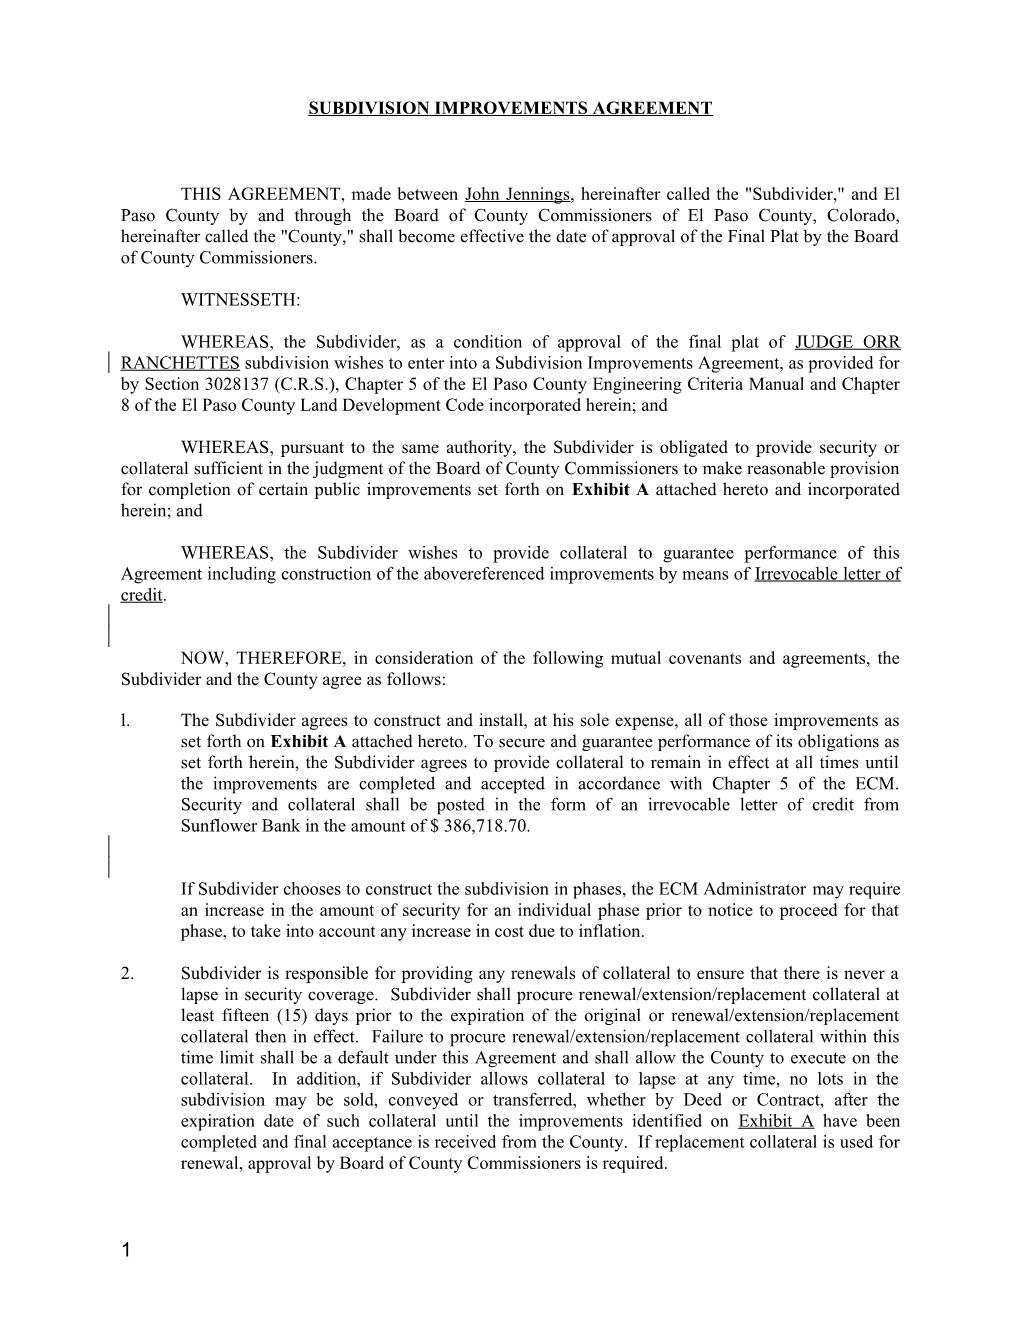 Subdivision Improvements Agreement s2